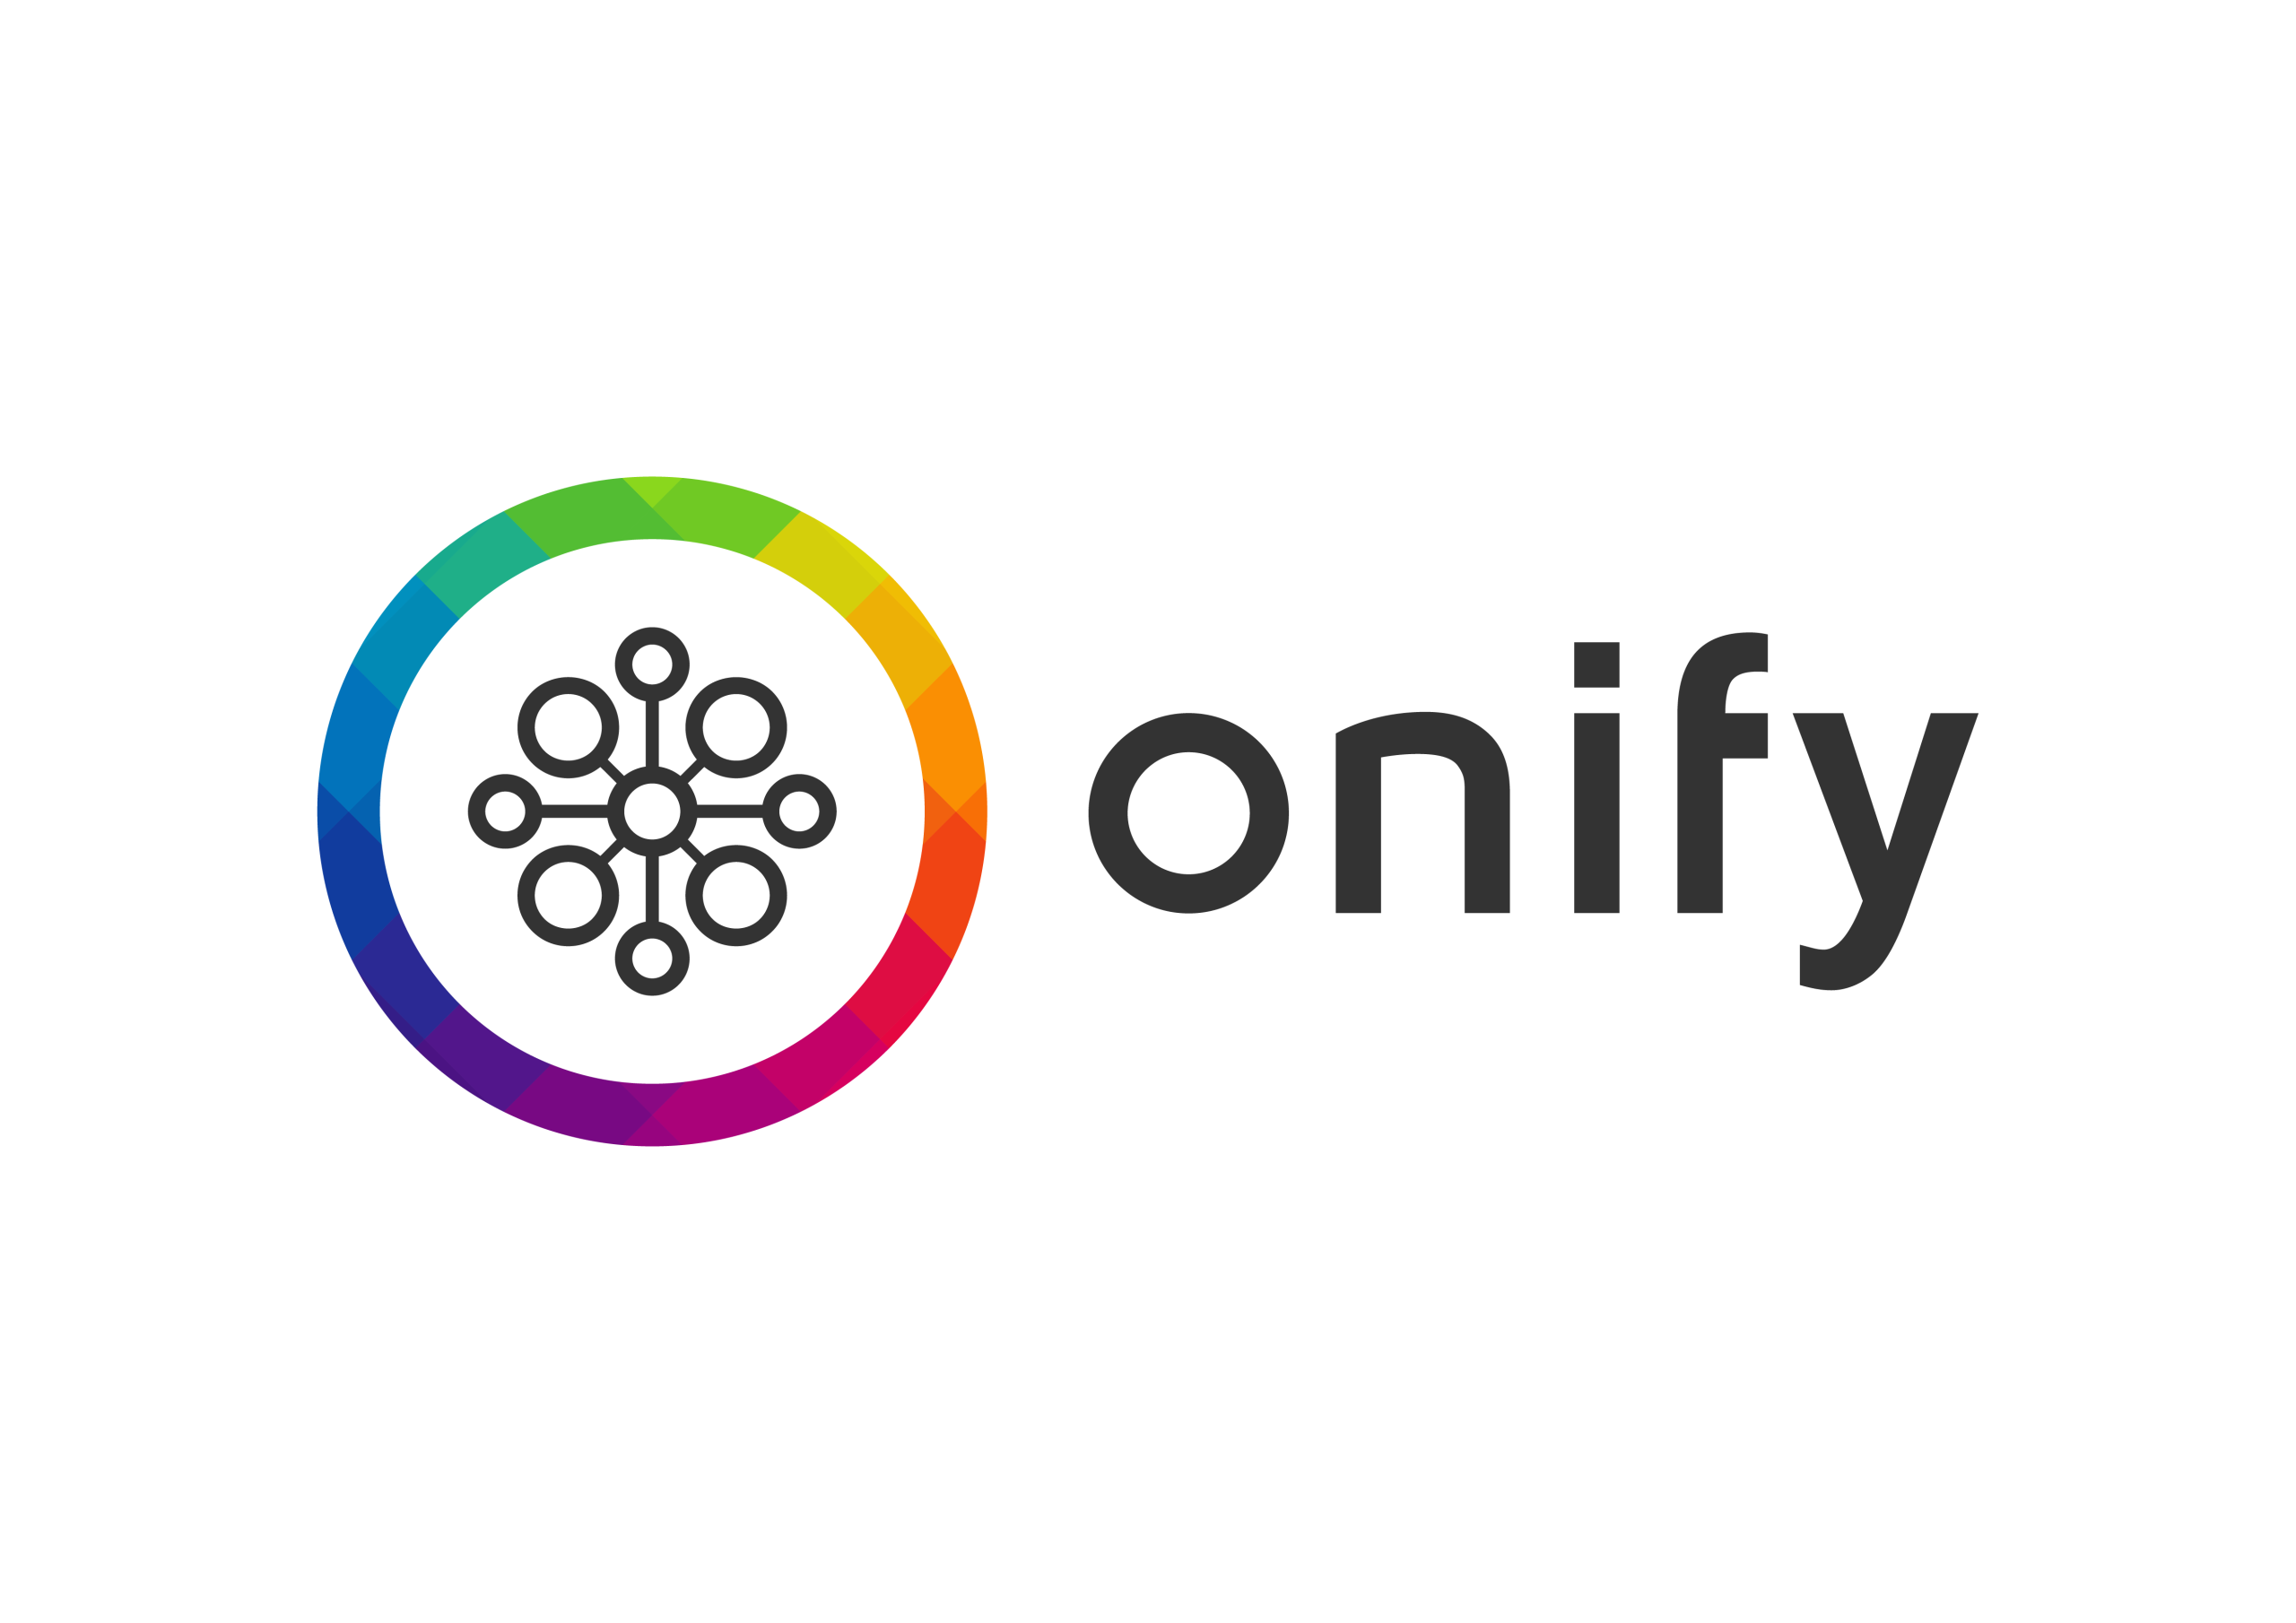 Onify